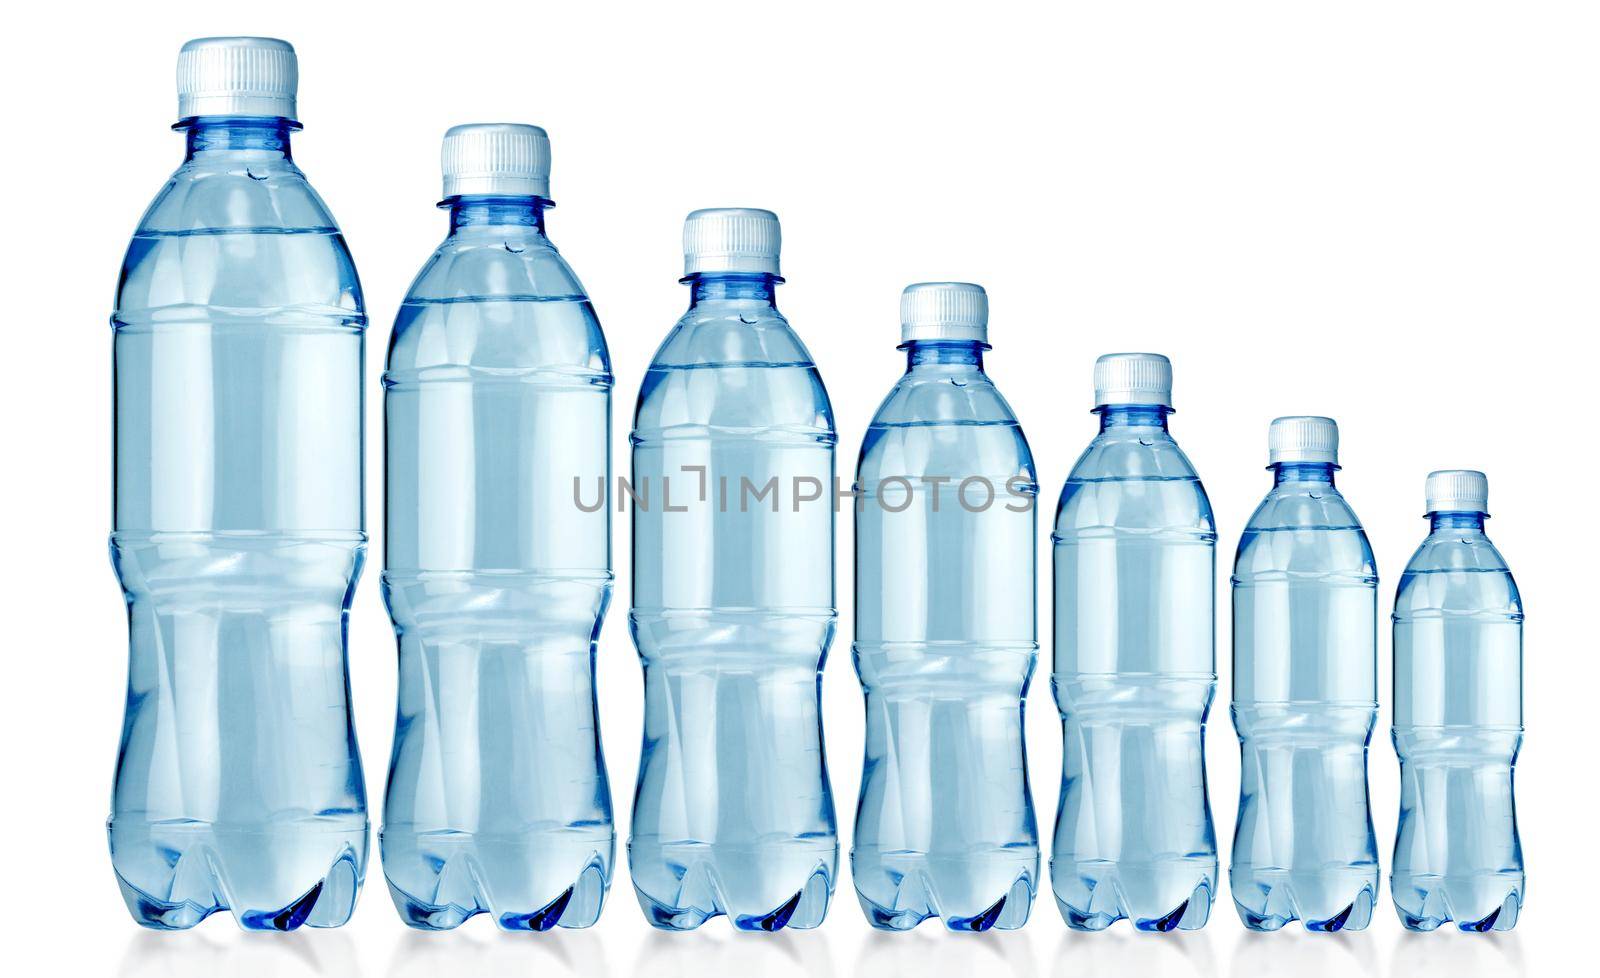 seven bottles by kornienko